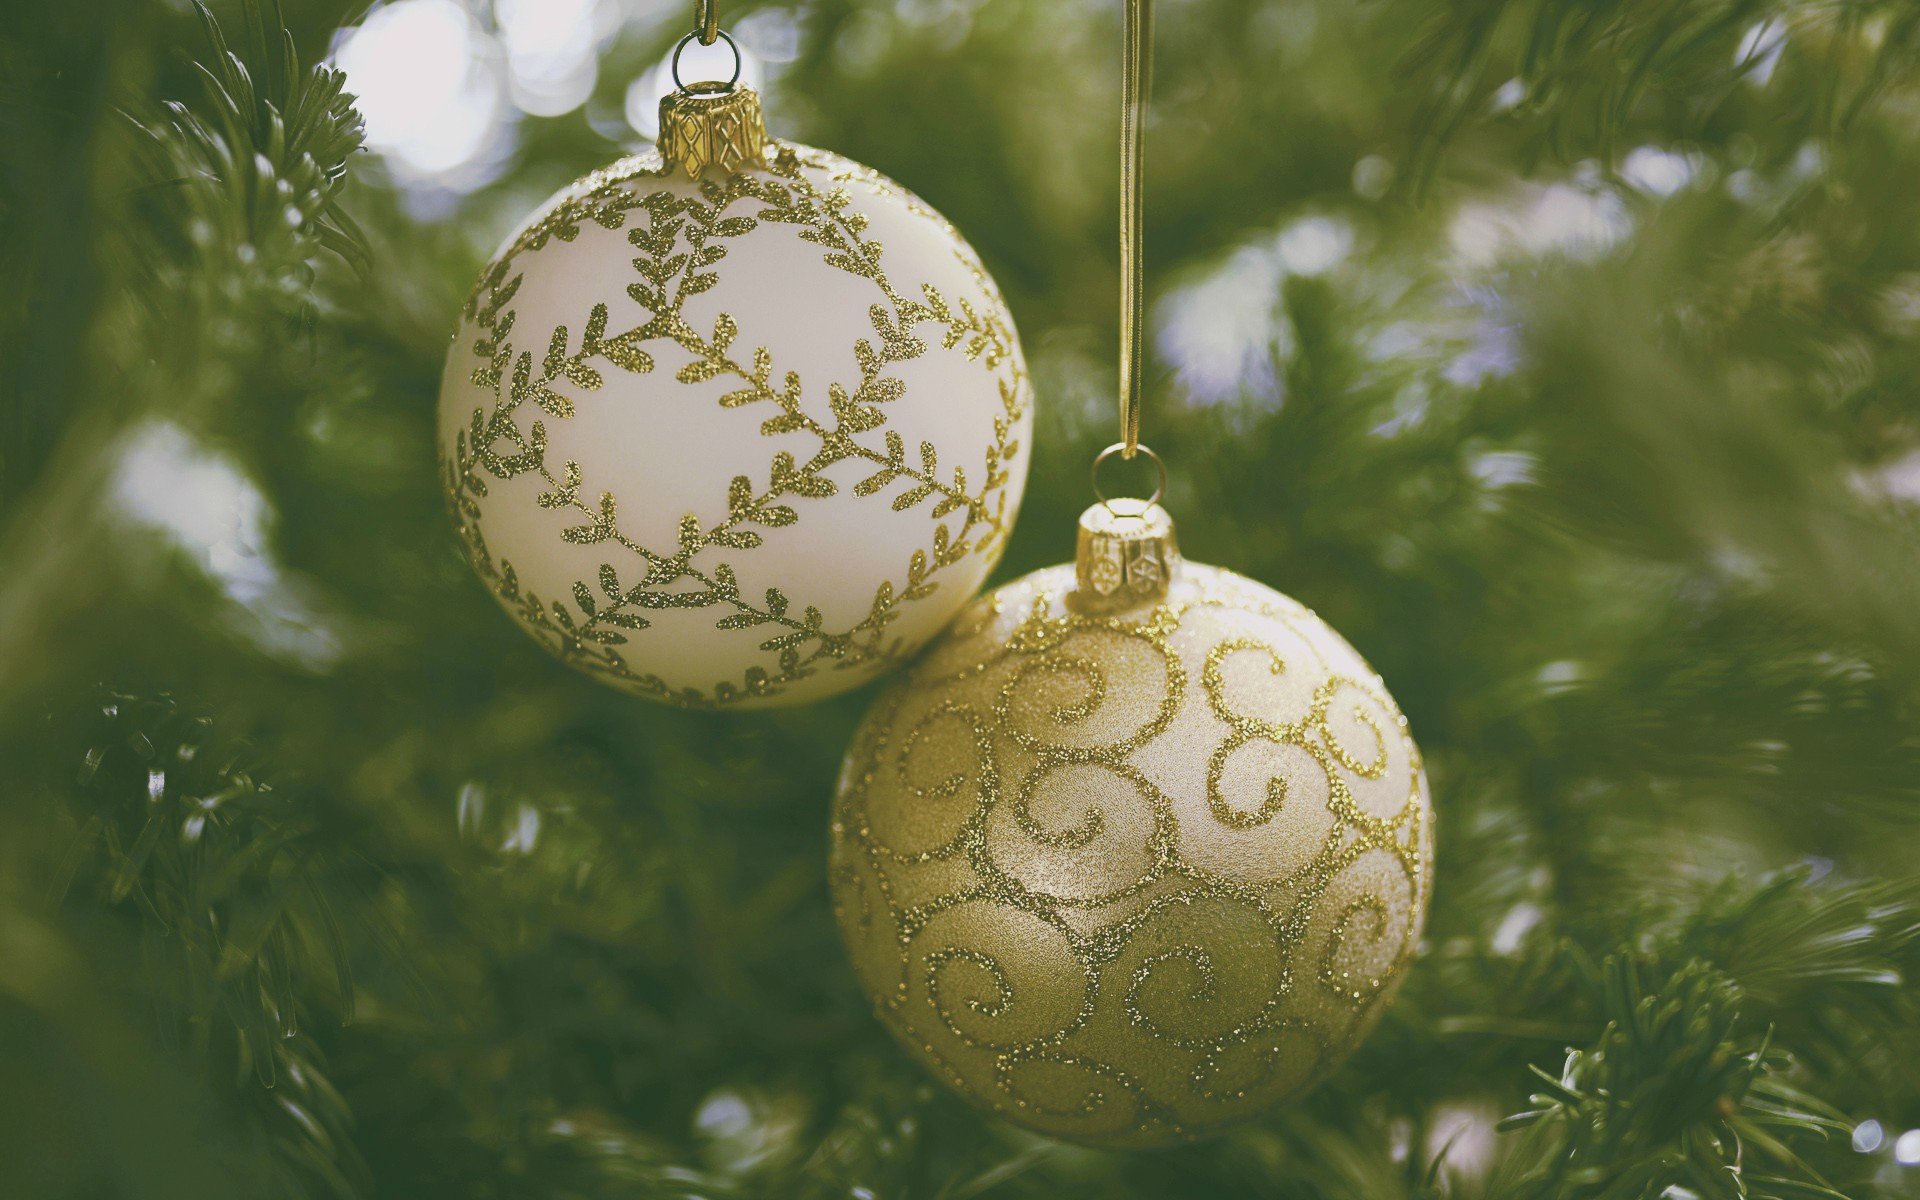 White Christmas balls on the tree